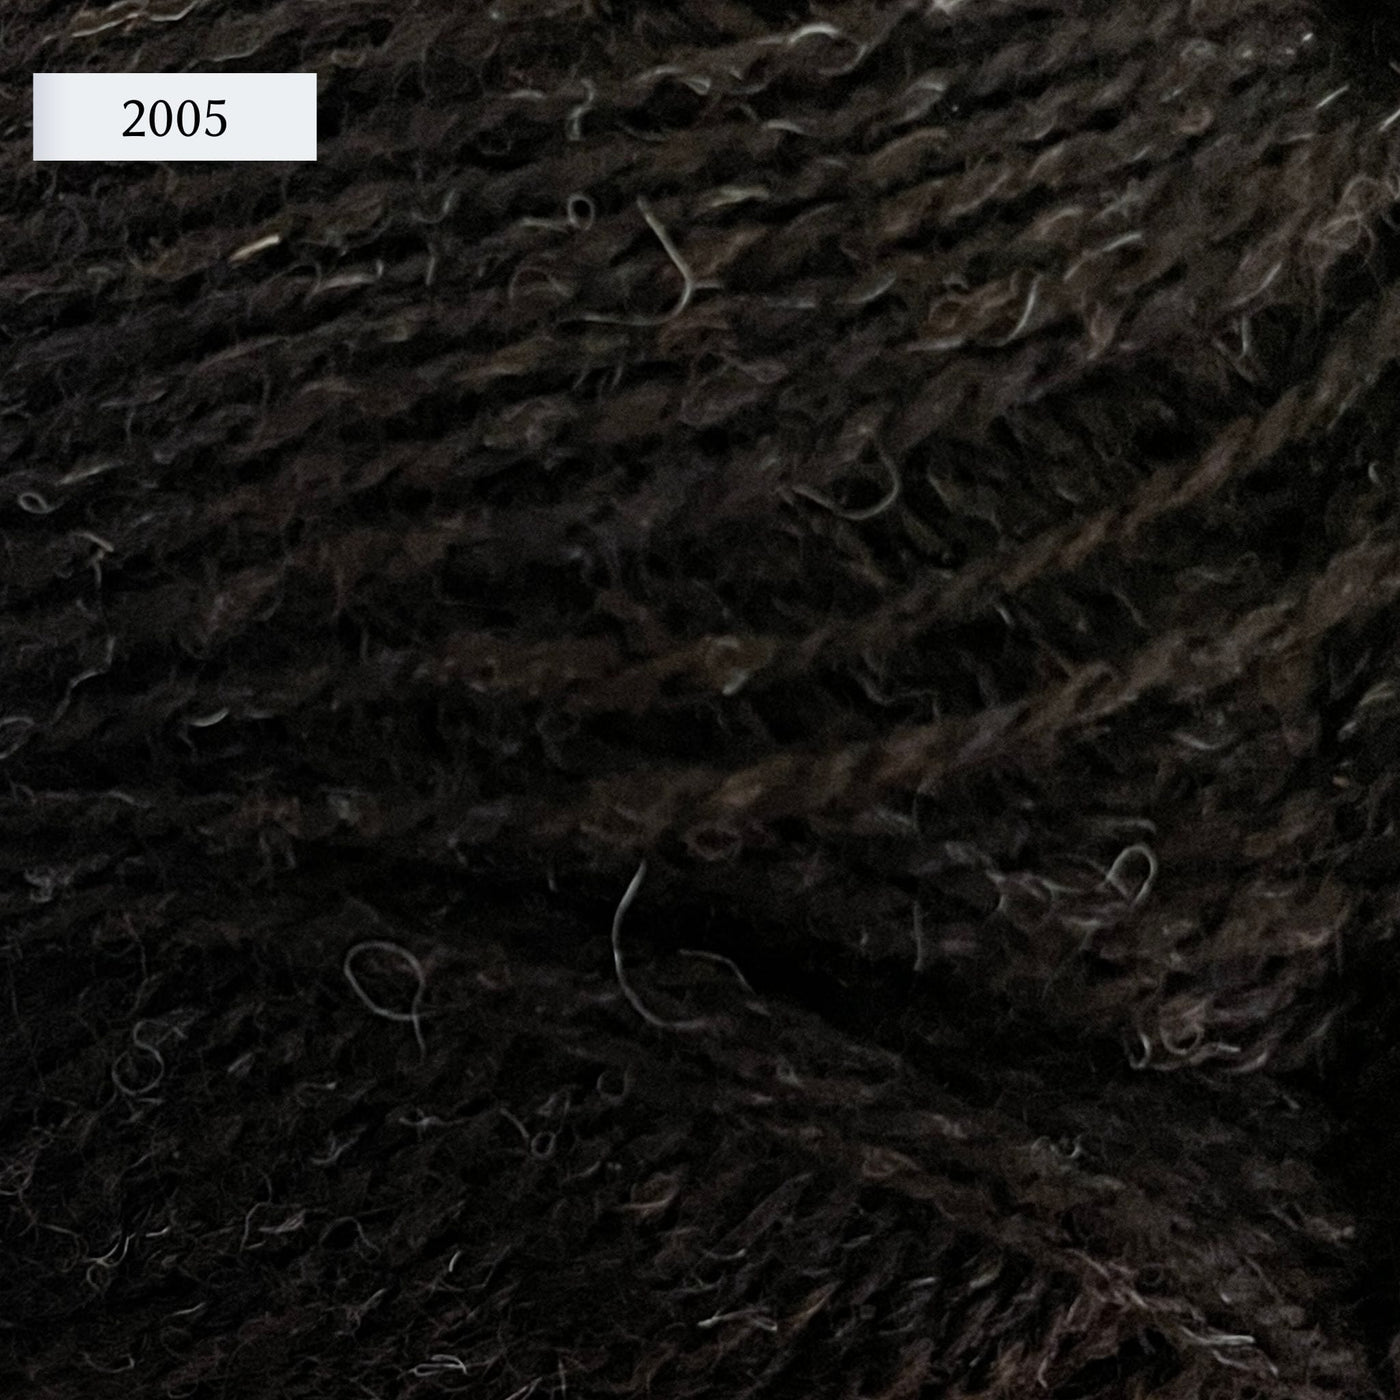 Jamieson & Smith Shetland Supreme, a fingering weight wool yarn, in color 2005, Shetland Black, a very dark brown/black